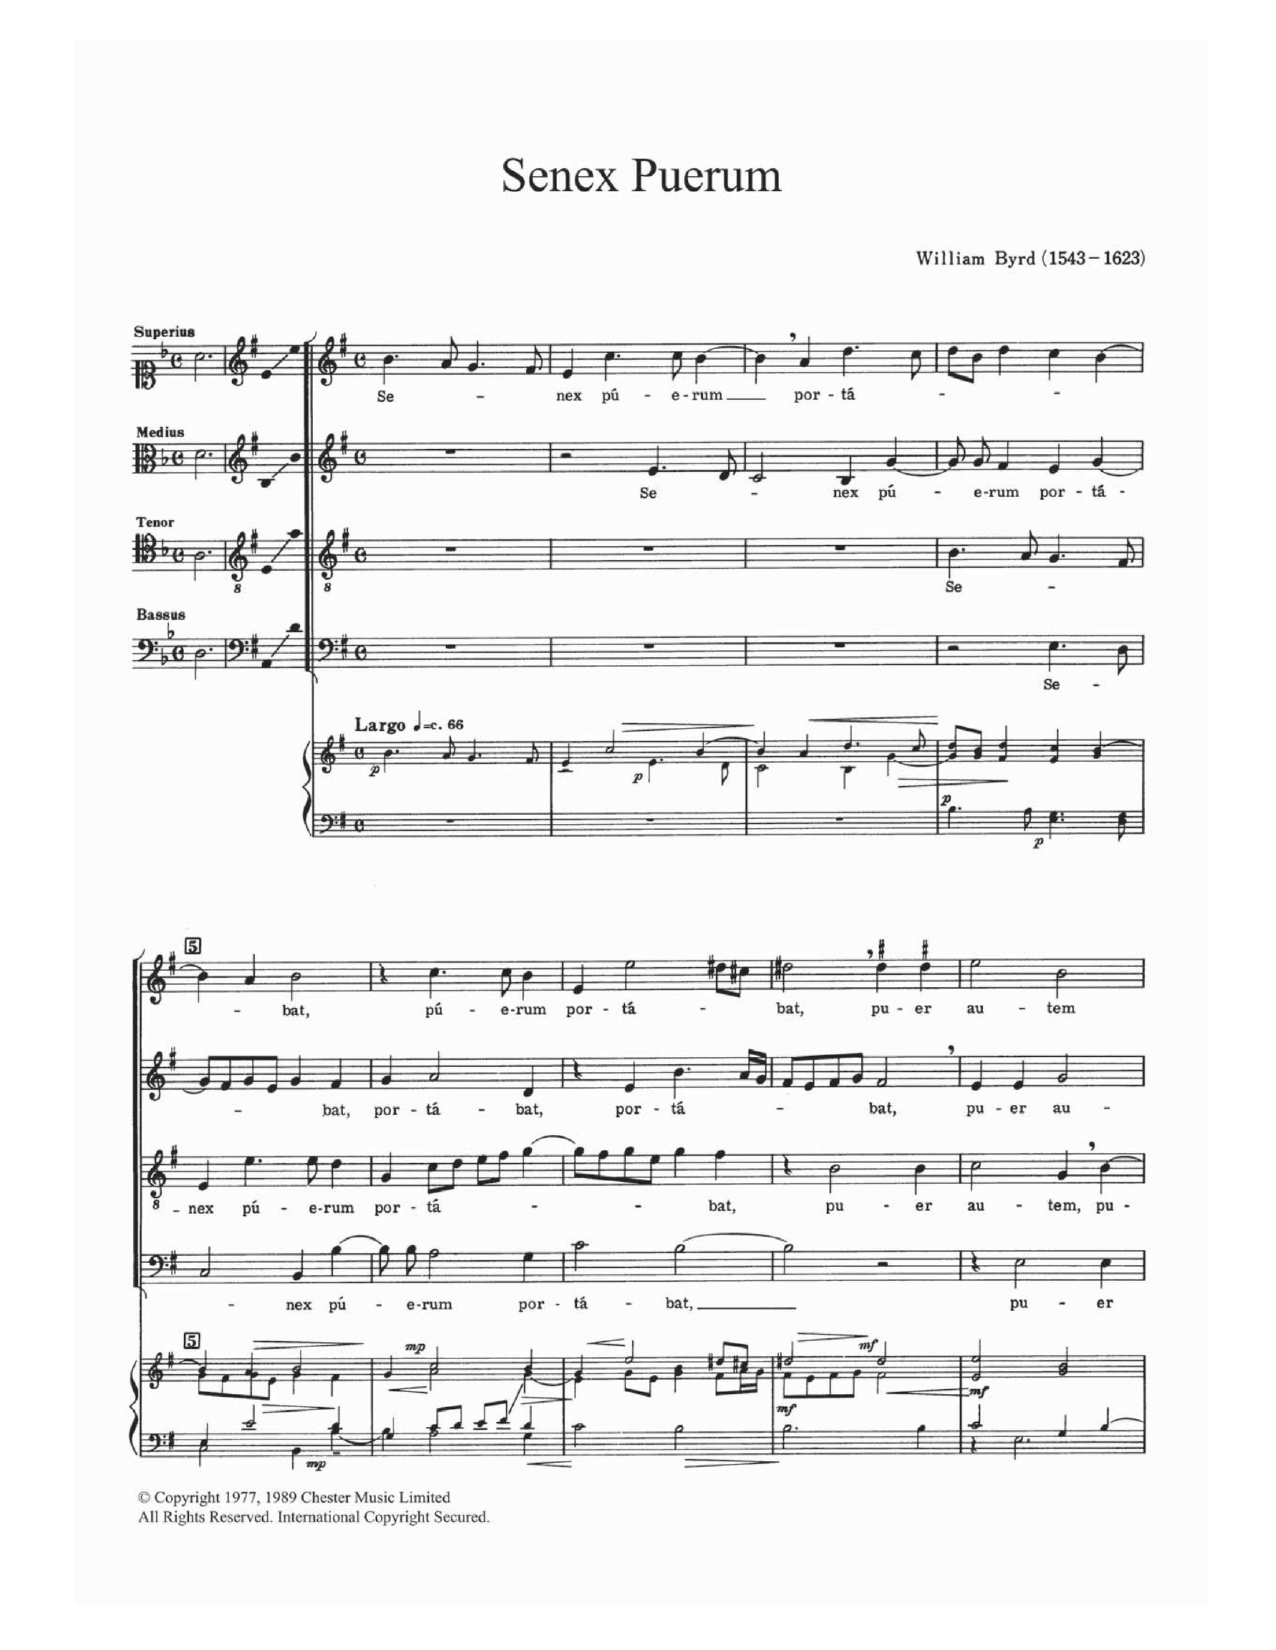 William Byrd Senex Puerum Sheet Music Notes & Chords for SATB - Download or Print PDF